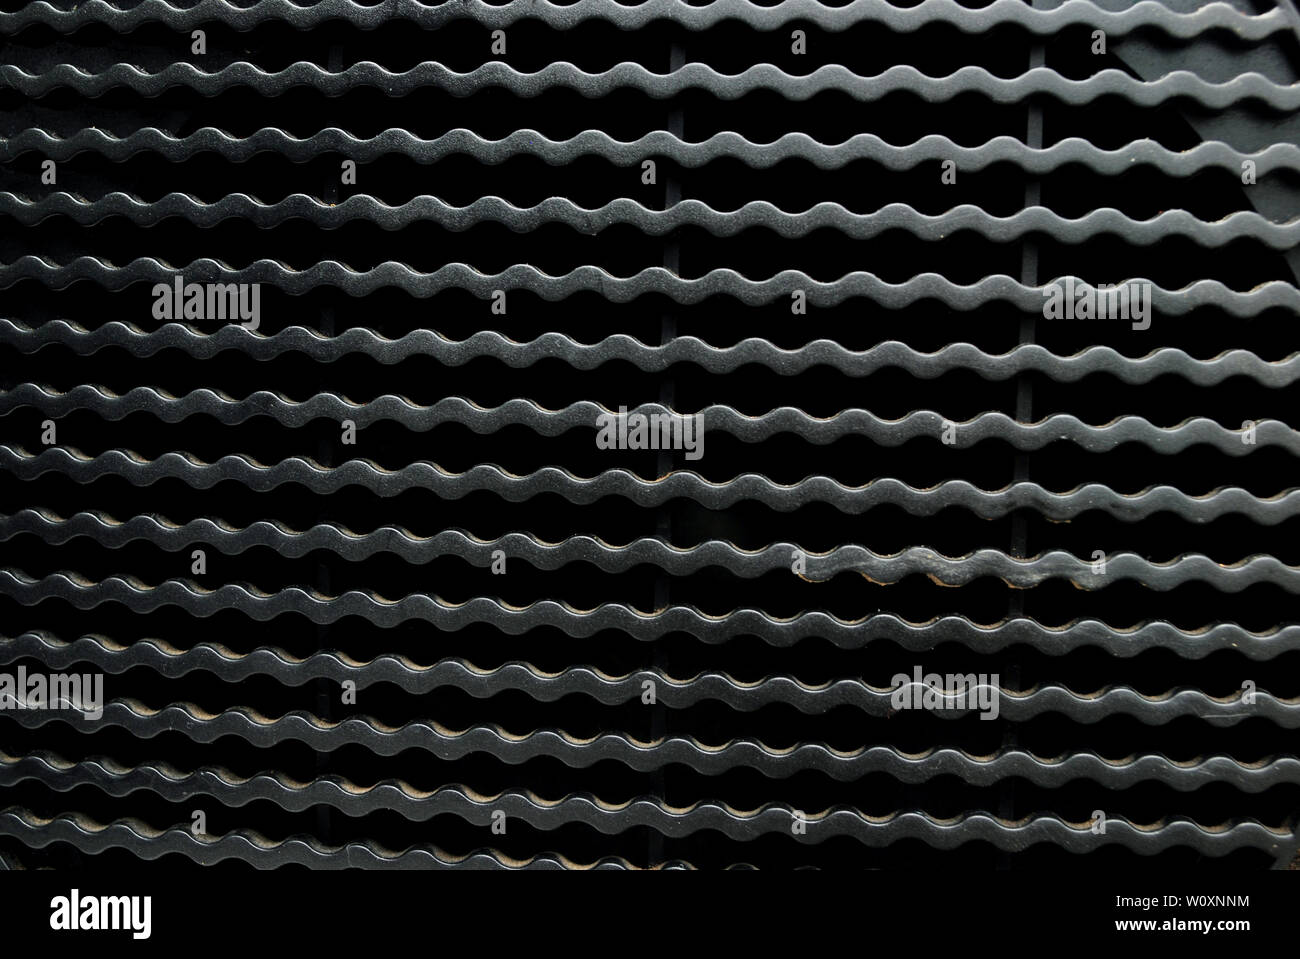 Mesh pattern background.Black wave pattern background. Stock Photo